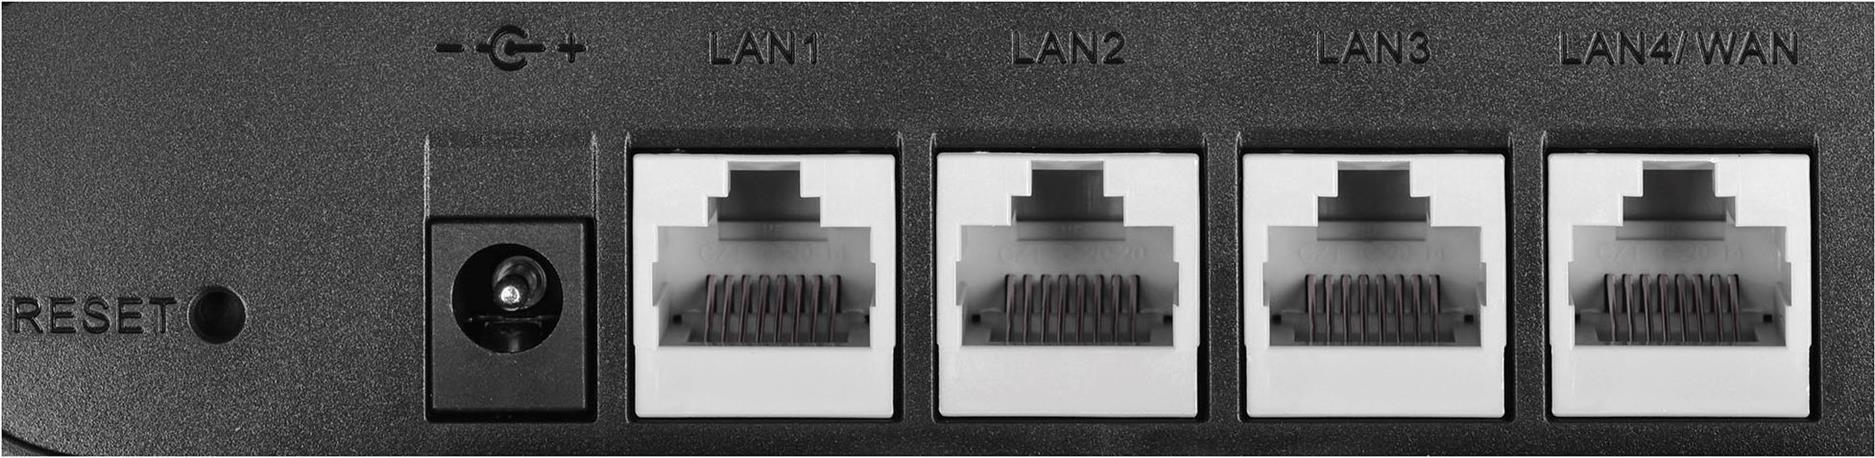 B532-232a LTECat.7 Rohkabel CPE VAN 3GPP Release 11 LAN IEEE 802.3/802.3u WIFI (B535-232a) von Huawei